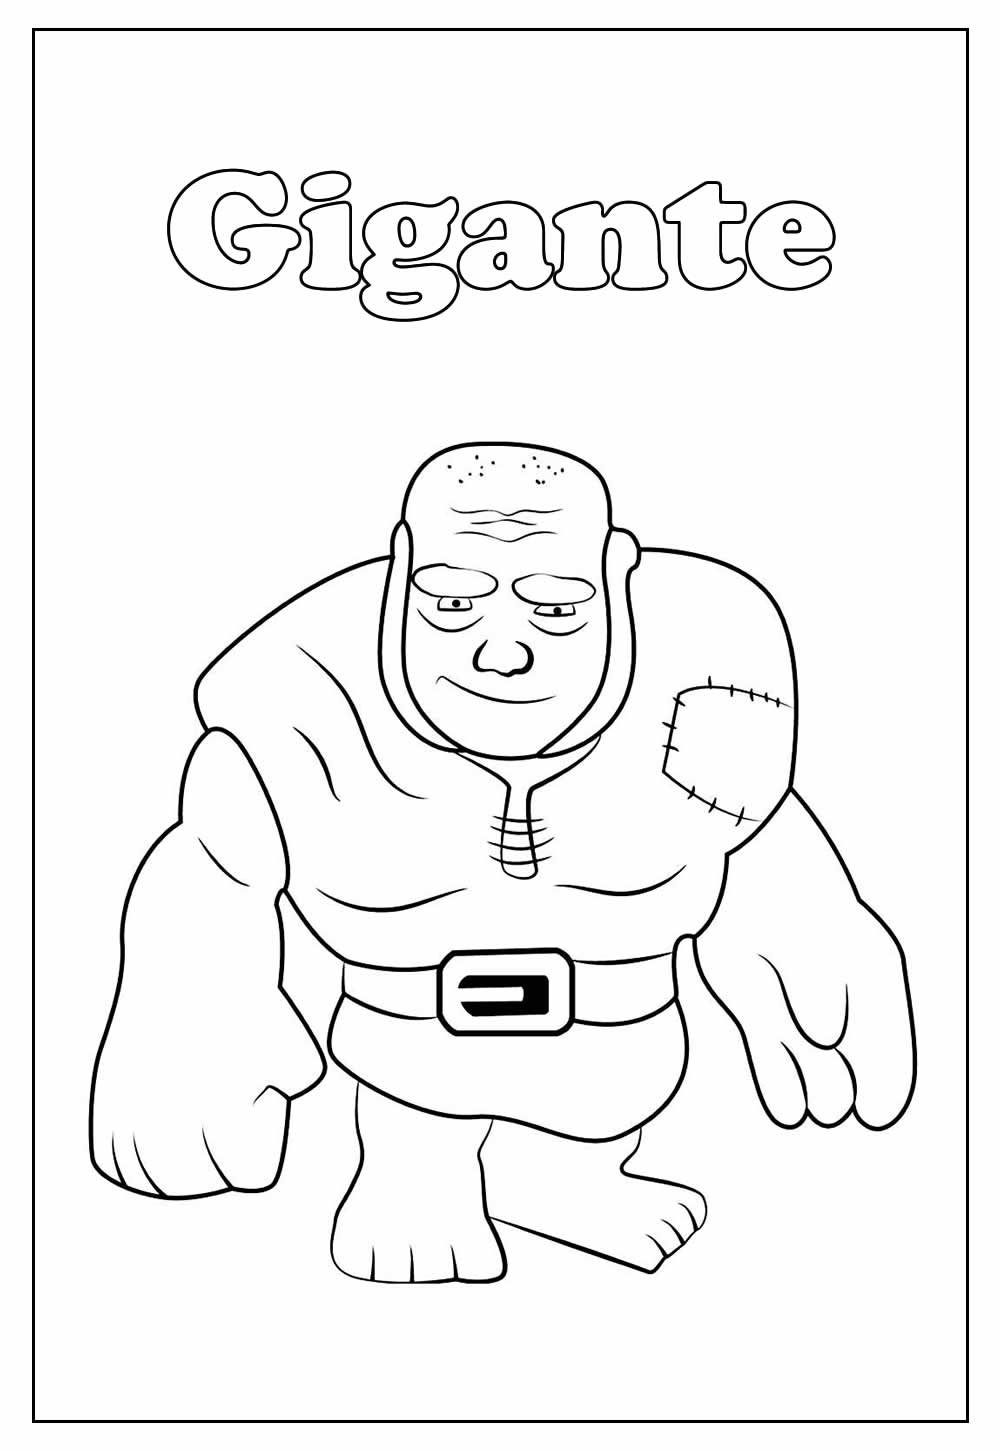 Desenho da Gigante para colorir - Clash Royale